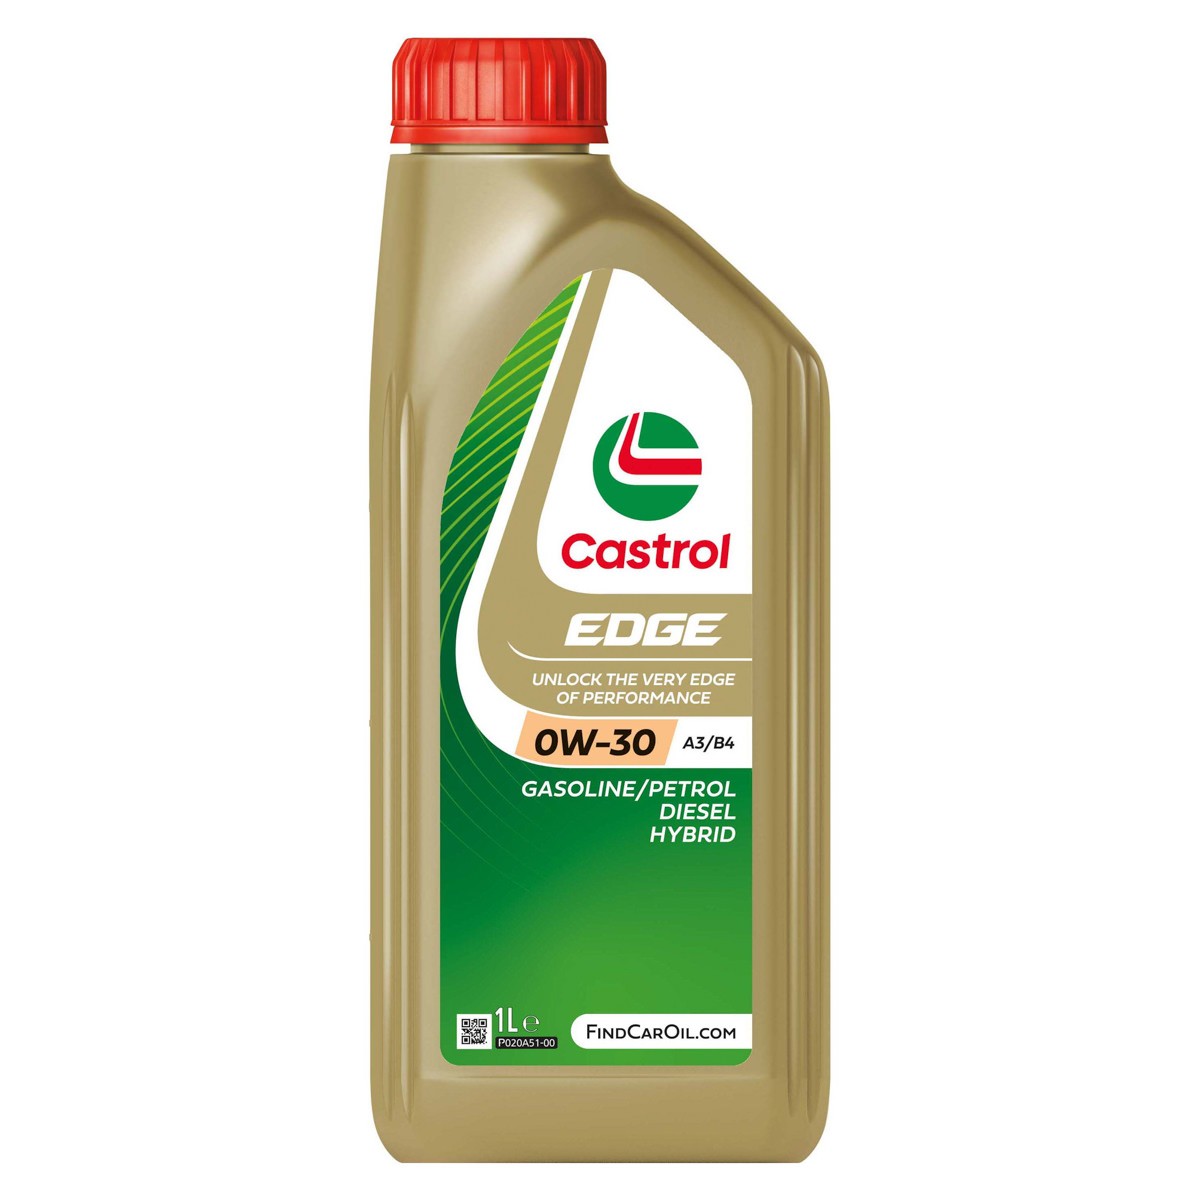 Car oil CASTROL 0W-30, 1l, Synthetic Oil longlife 15F698